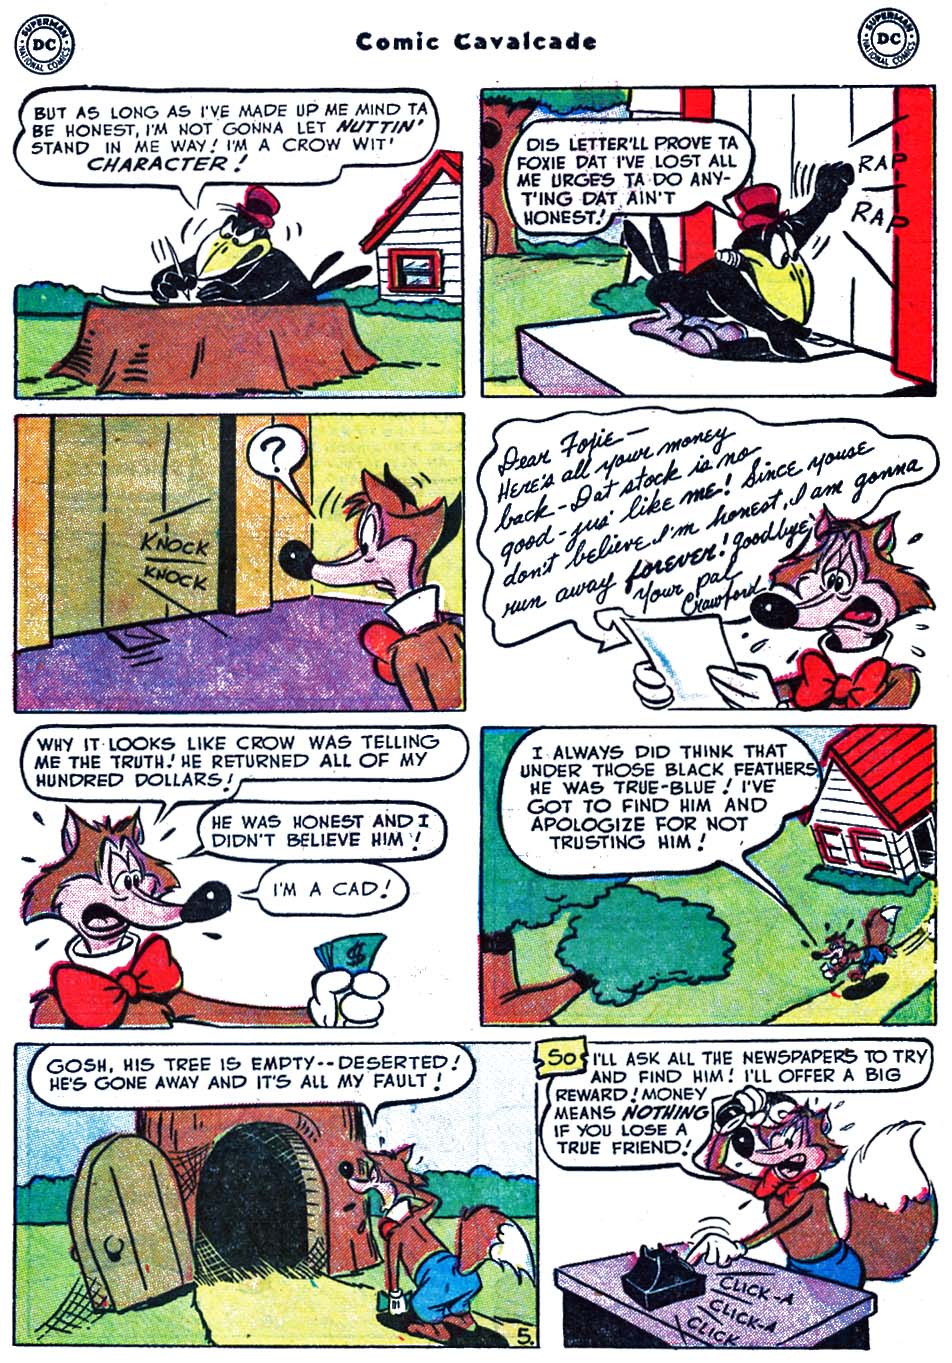 Comic Cavalcade issue 51 - Page 7